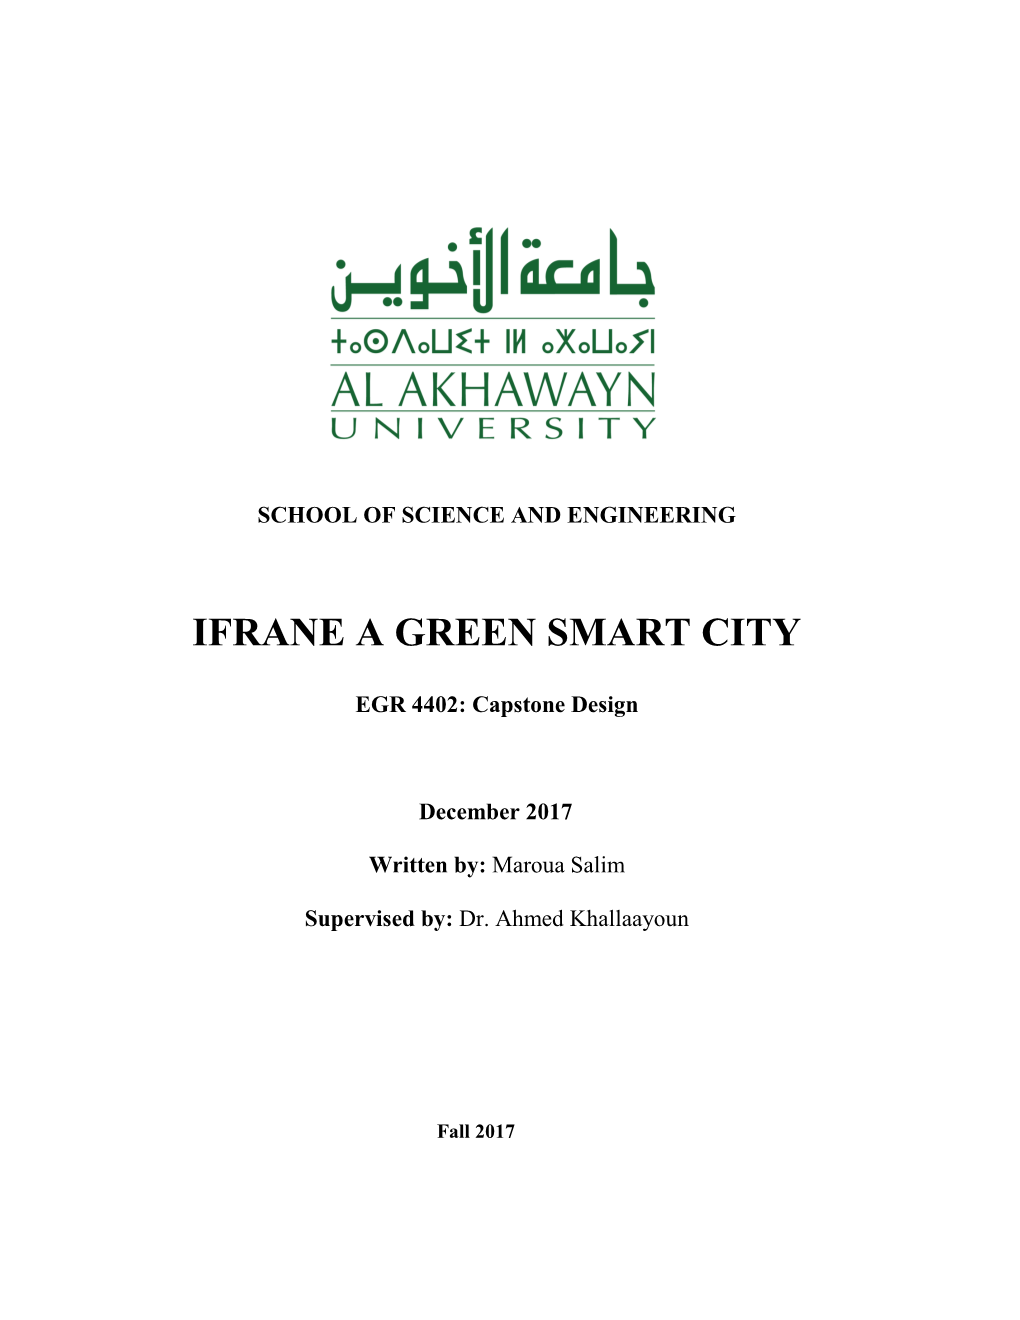 Ifrane a Green Smart City